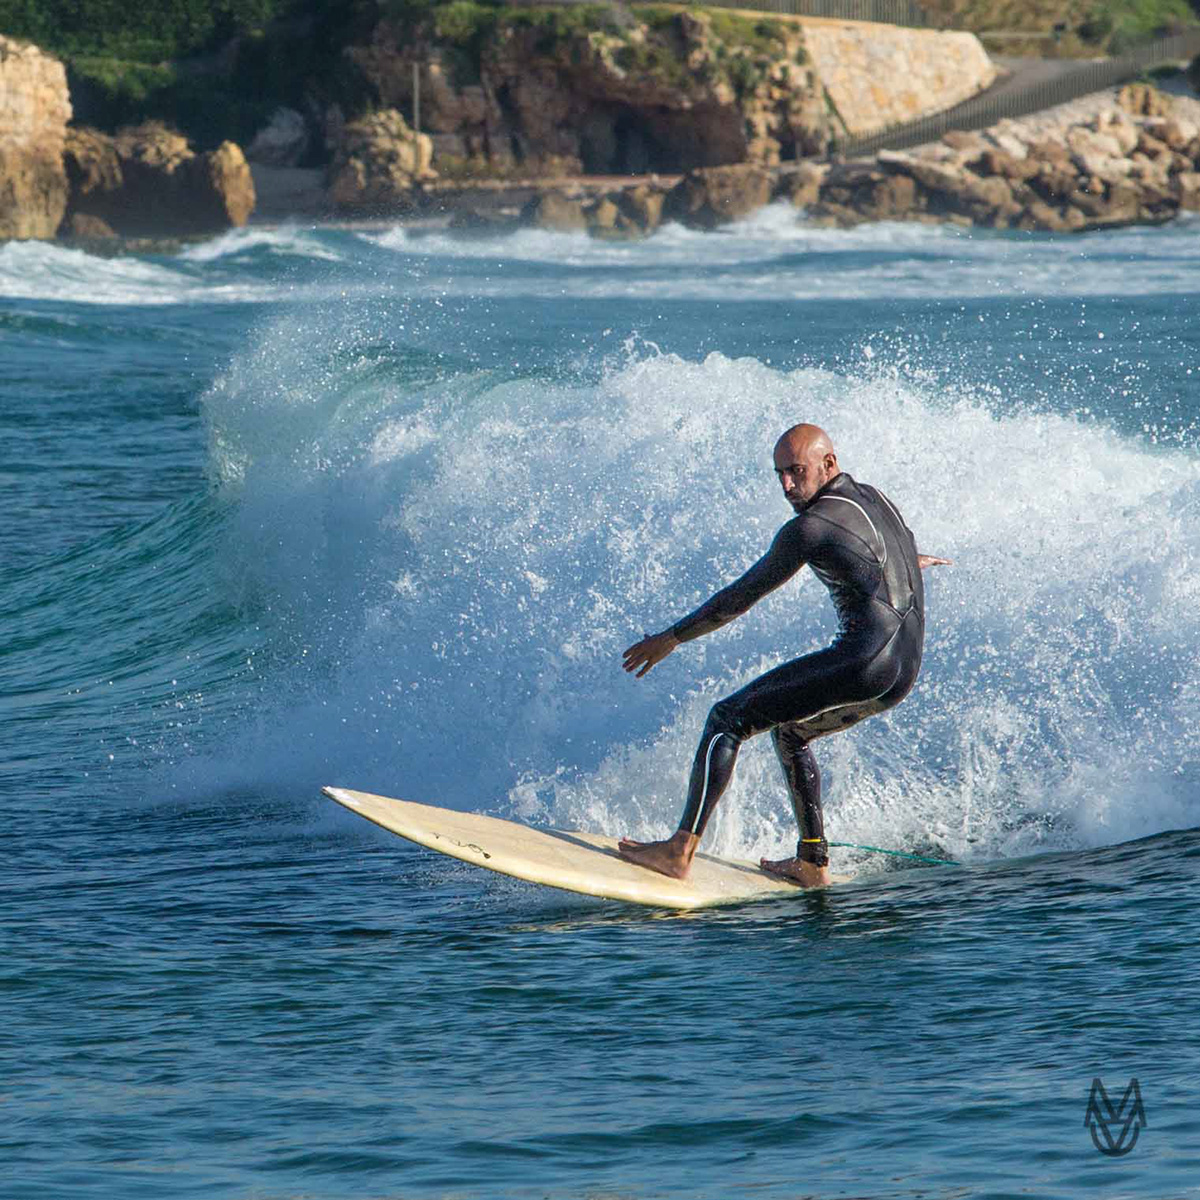 surfing lebanon Byblos Surfing Lebanon water sport Lebanon Water Sport Jbeal Jubeal chehimi  Mohamad chehimi 